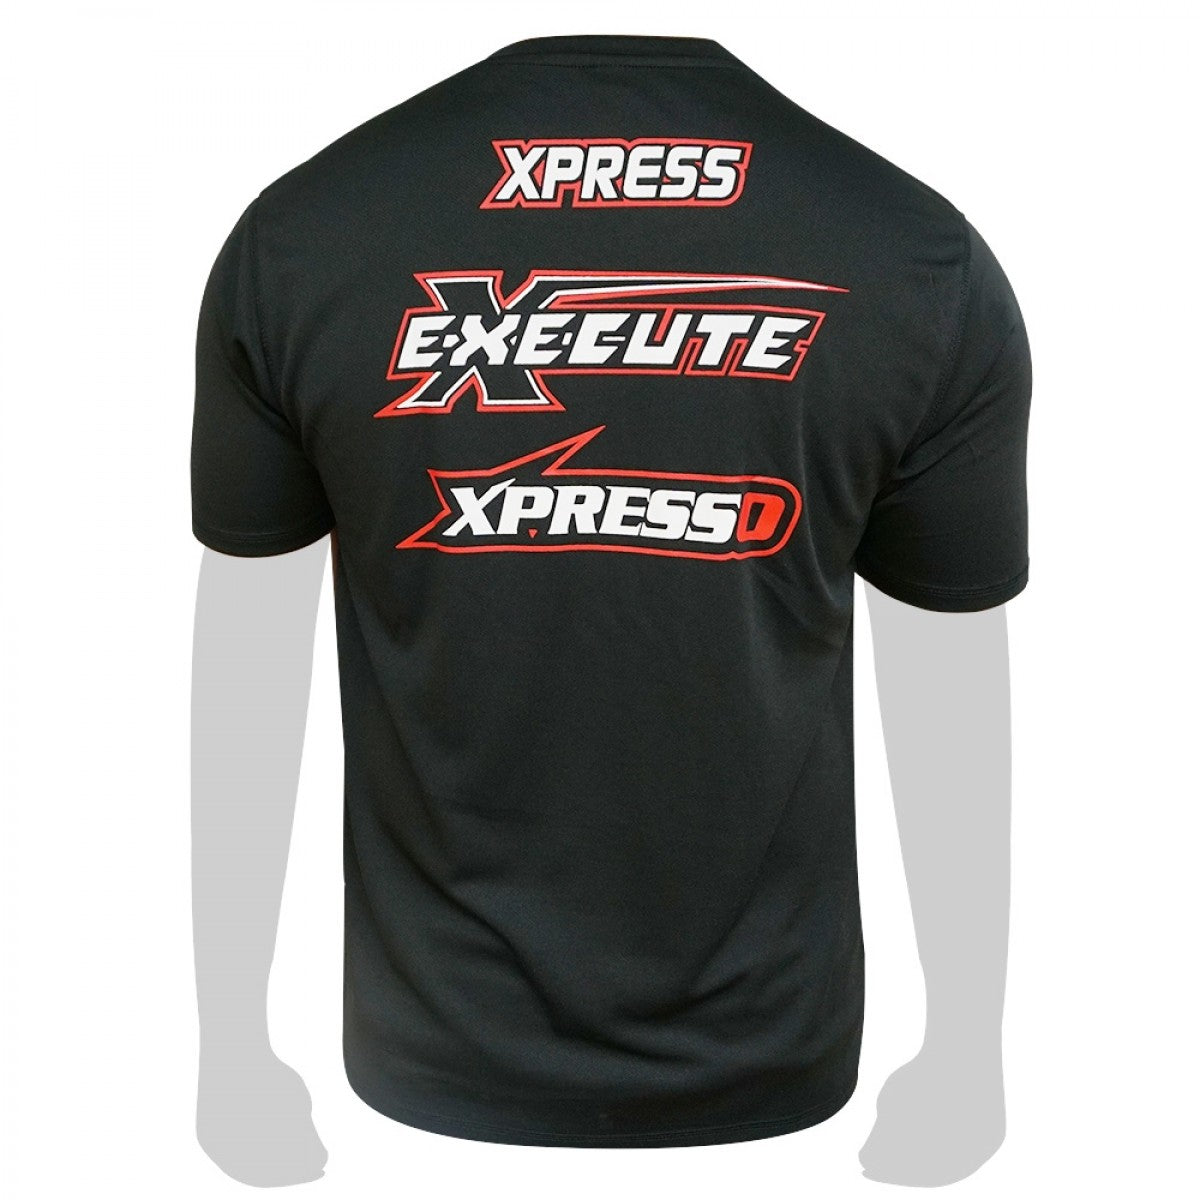 Xpress Execute T-Shirt